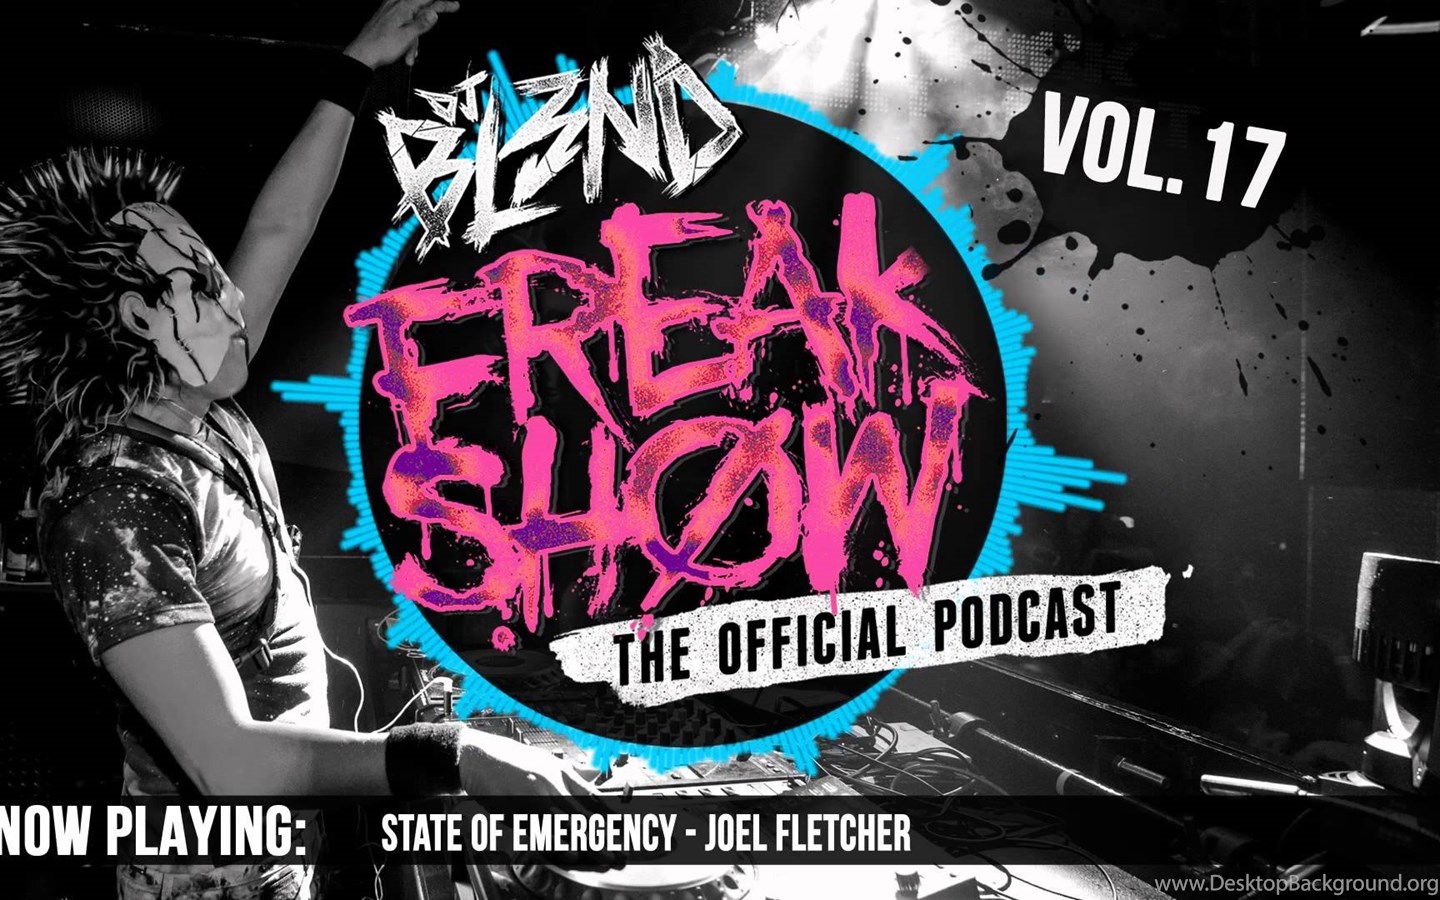 Show volume. Музыкальные фрики обои. The Music Freaks обои. Electronic House Vol. 17. Freak show (feat. India Dupriez) обложка.